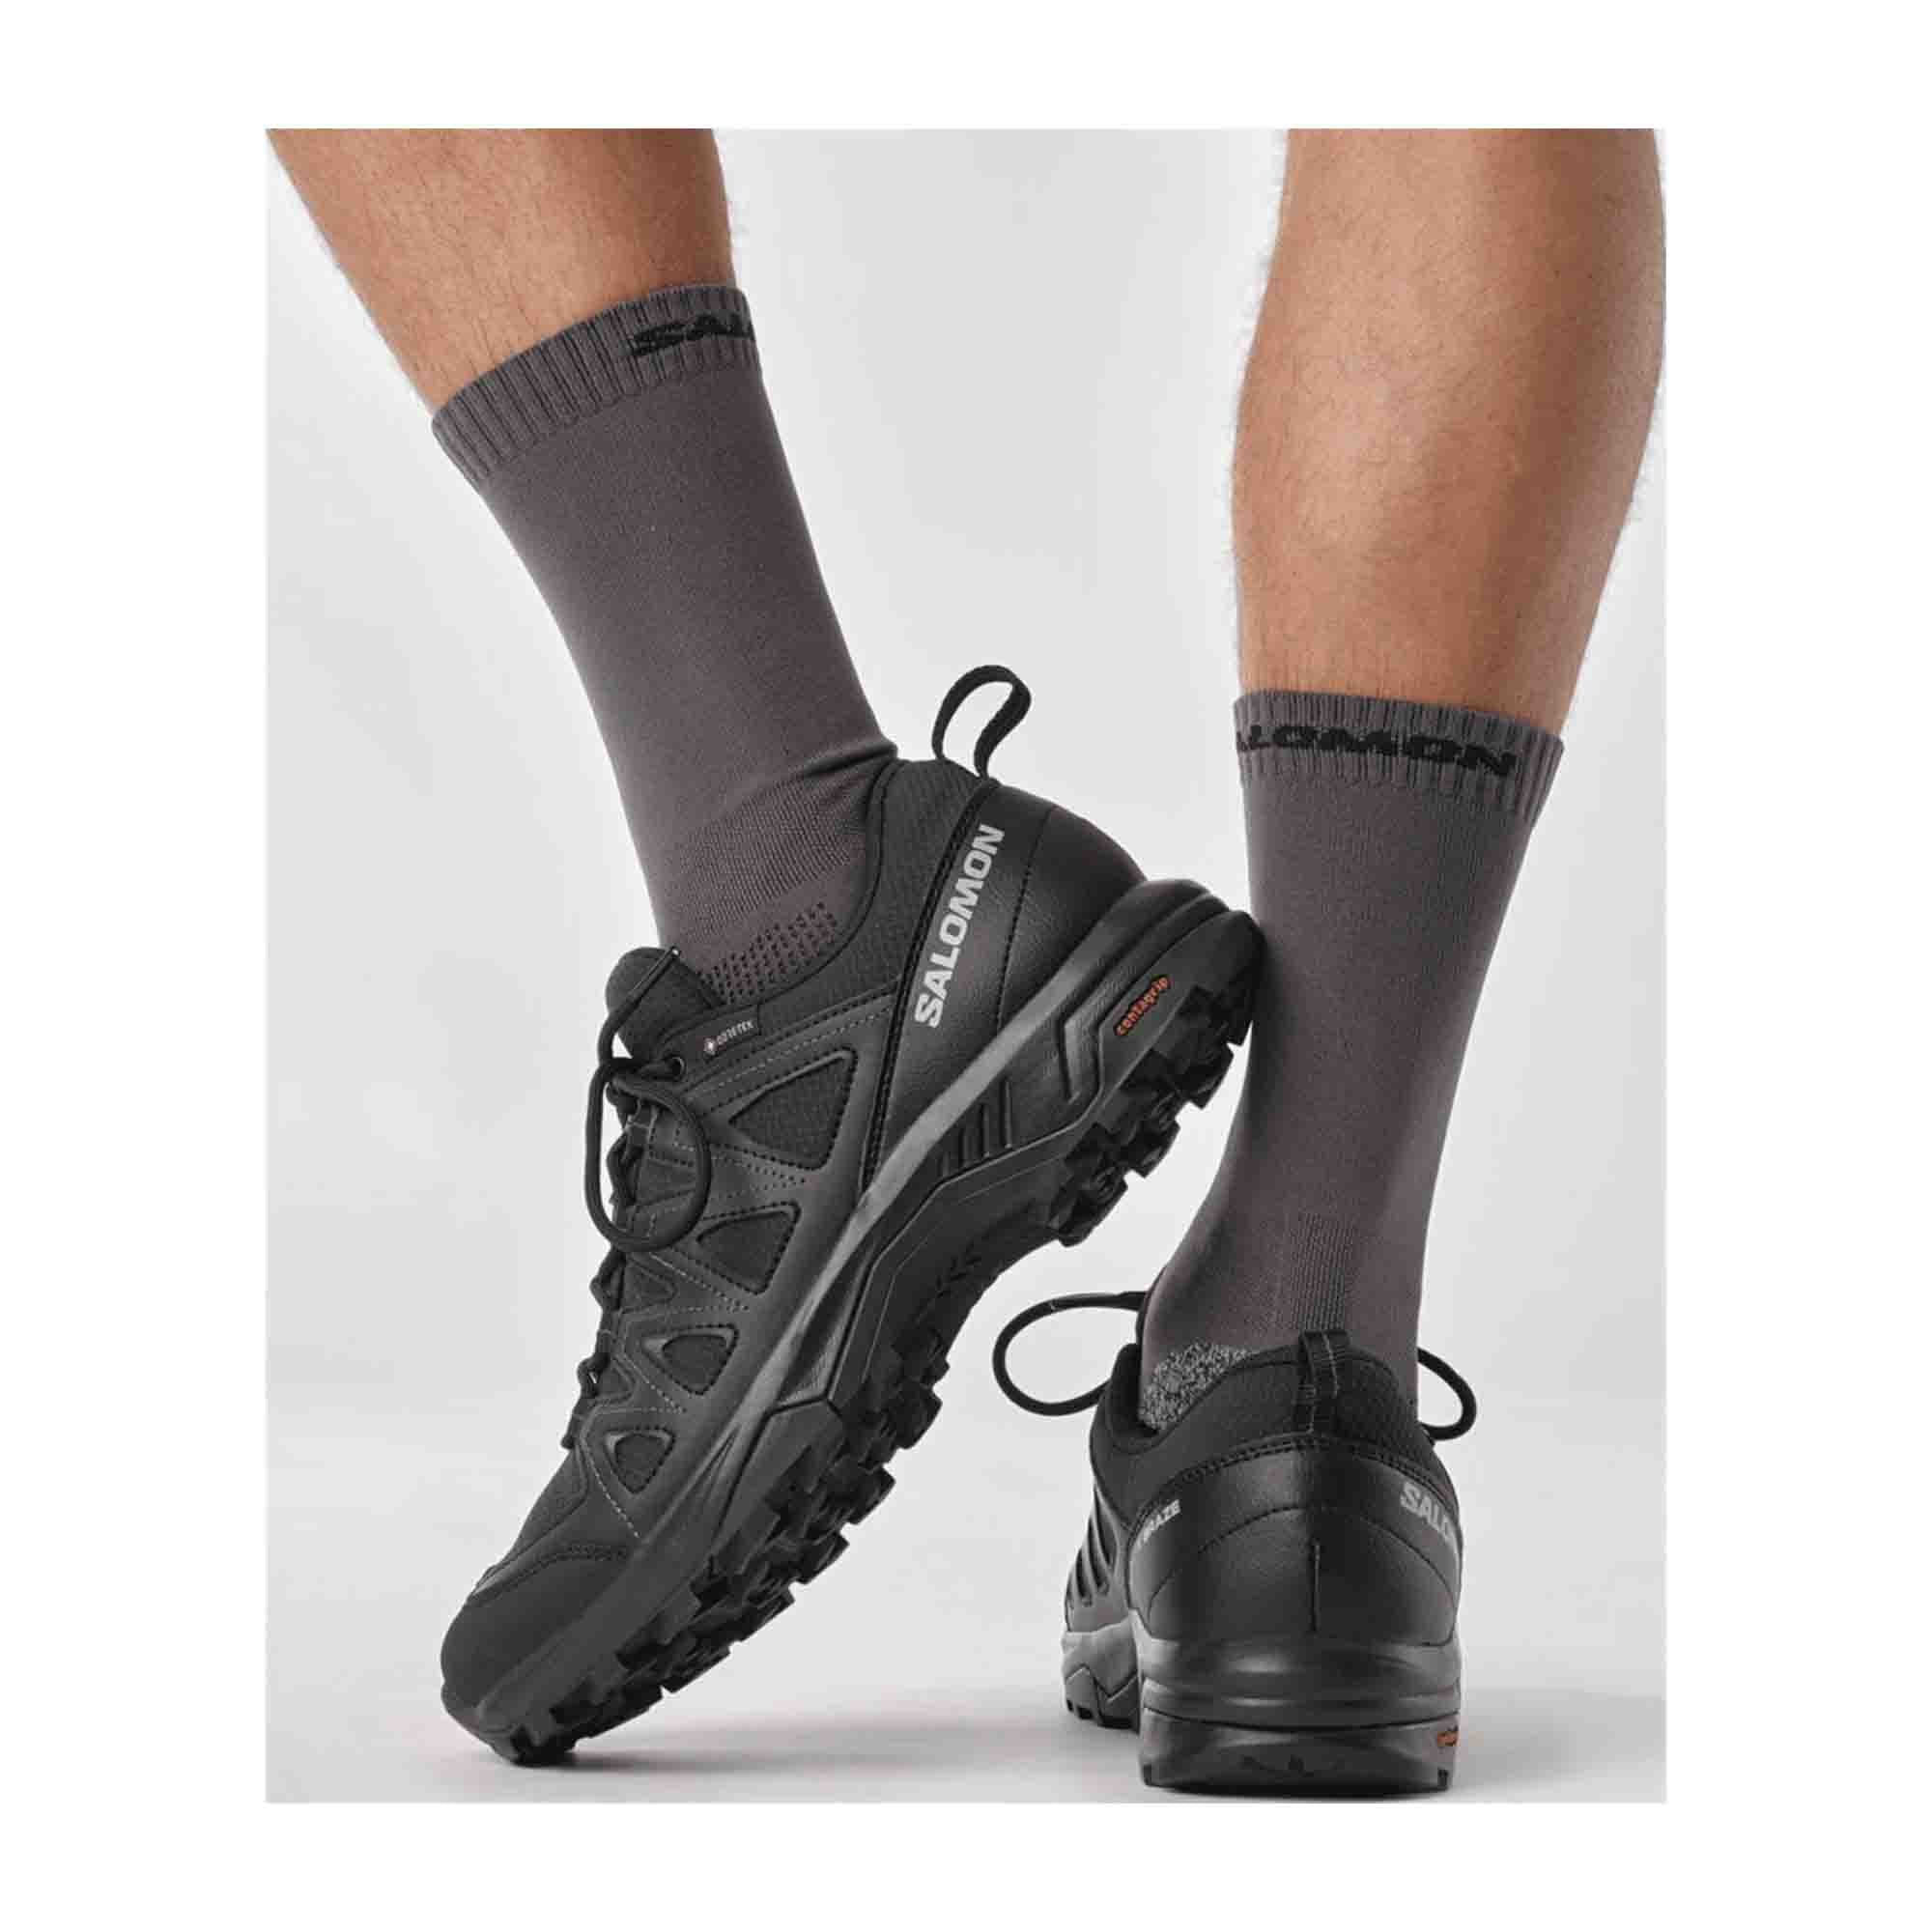 Salomon X Braze GTX for men, black, shoes